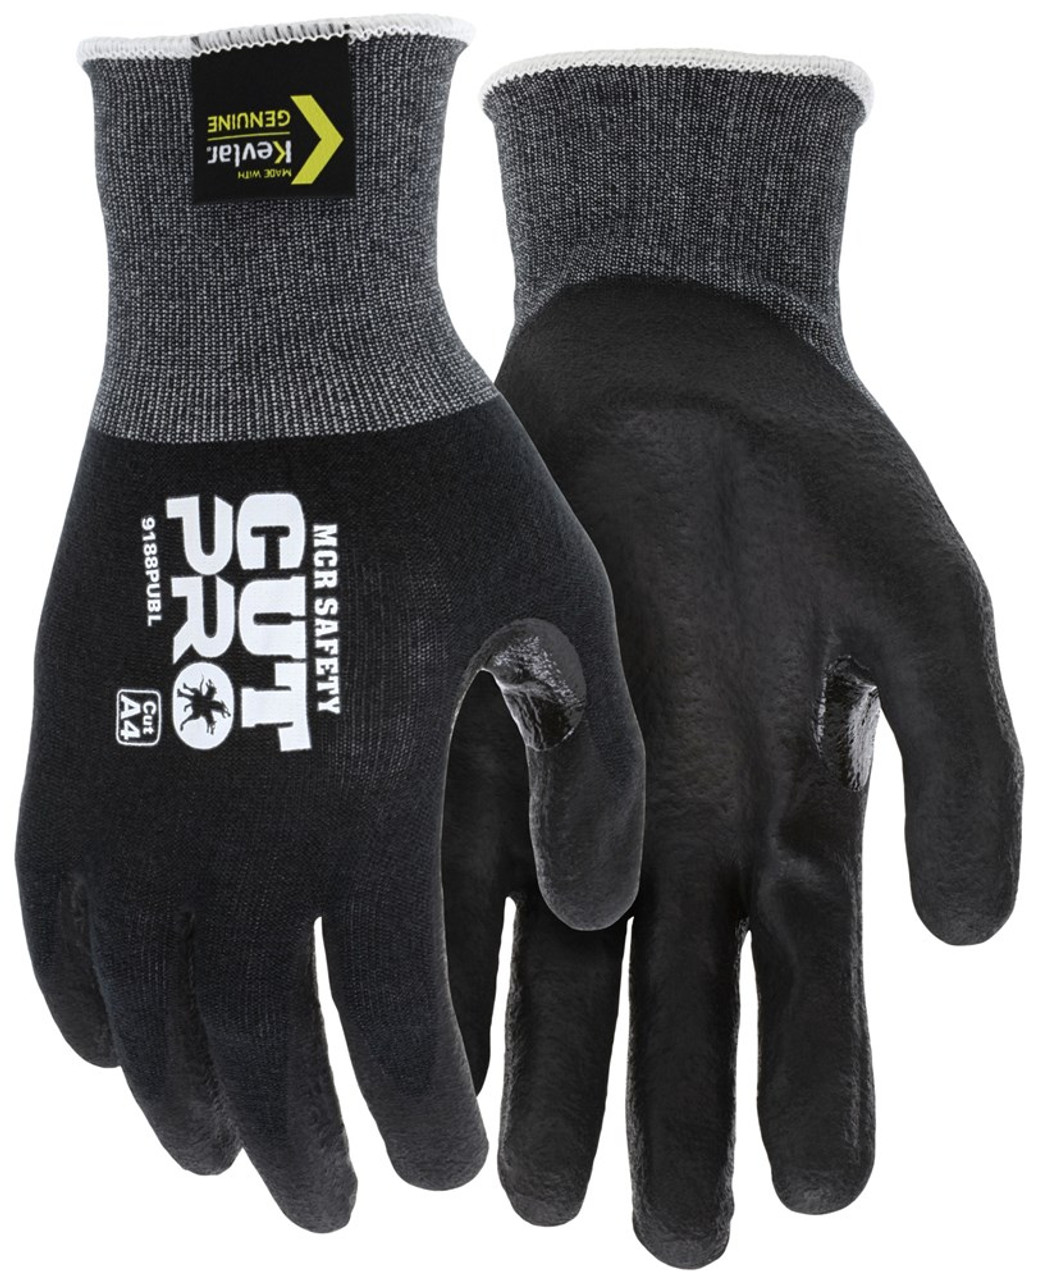 MCR Safety Cut Pro 18 Gauge Kevlar PU Work Gloves 9188PUB 12 pairs